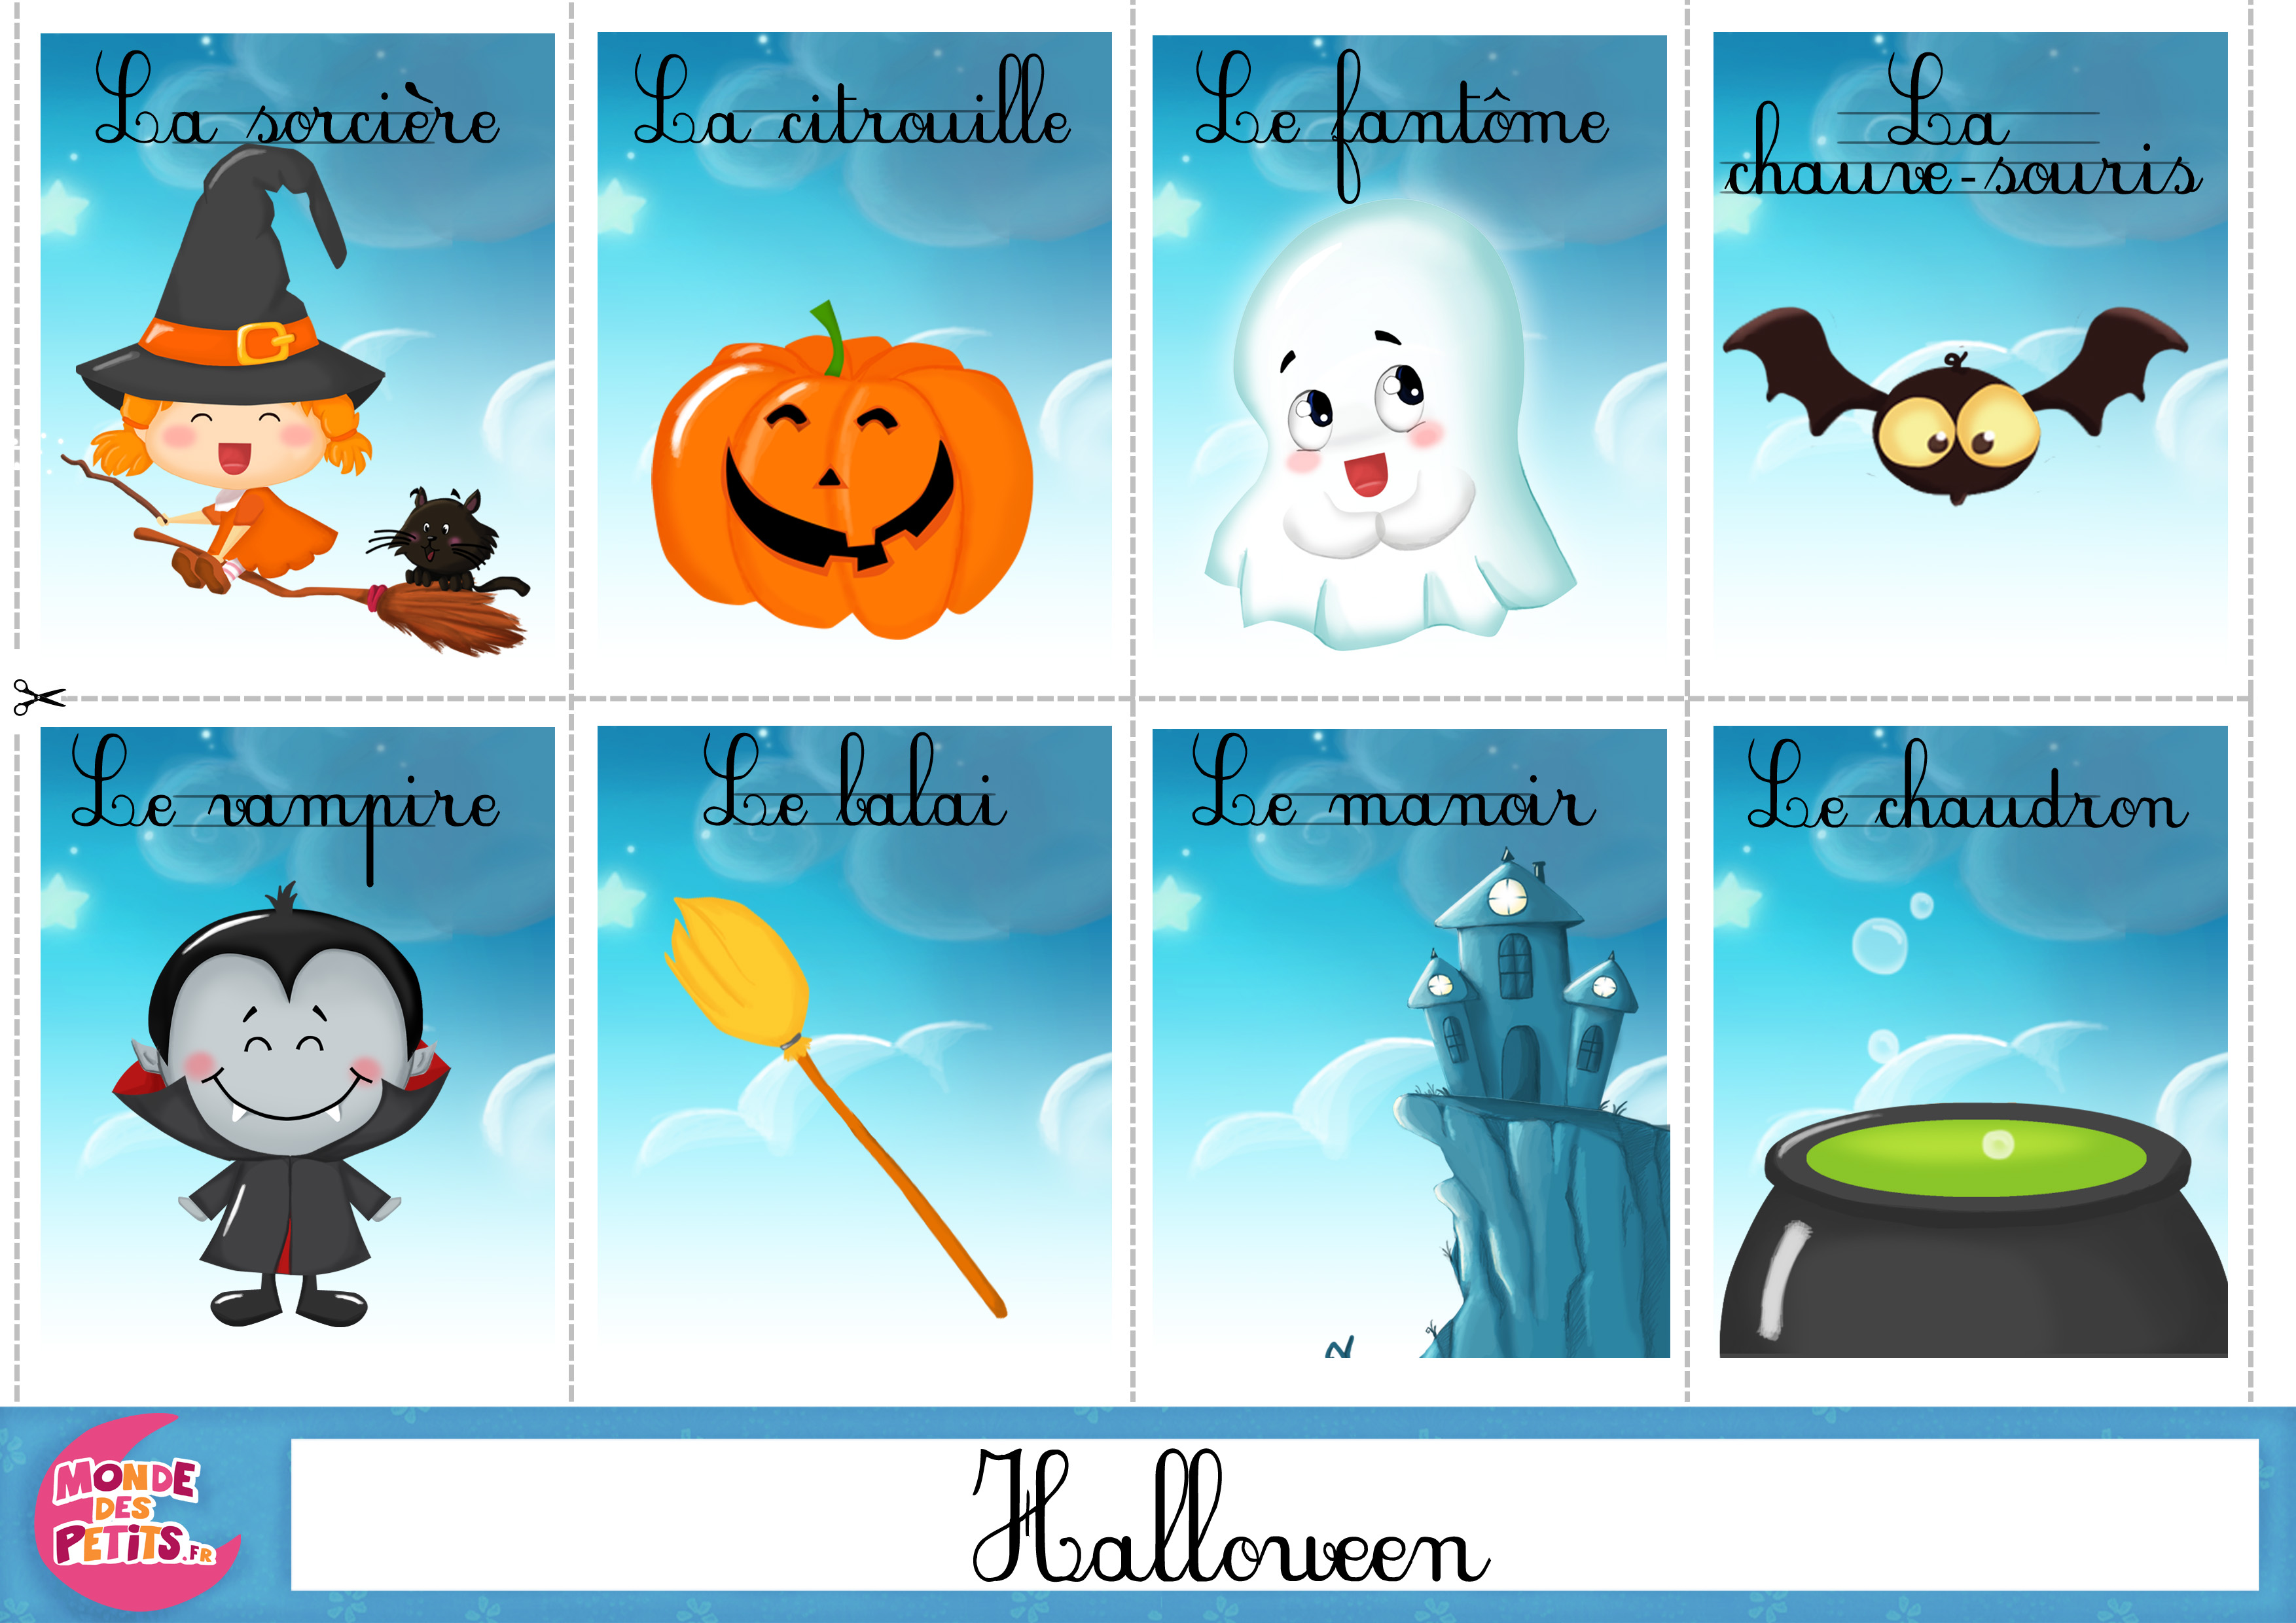 http://www.mondedestitounis.fr/images/apprendre/apprendre-vocabulaire-halloween.jpg